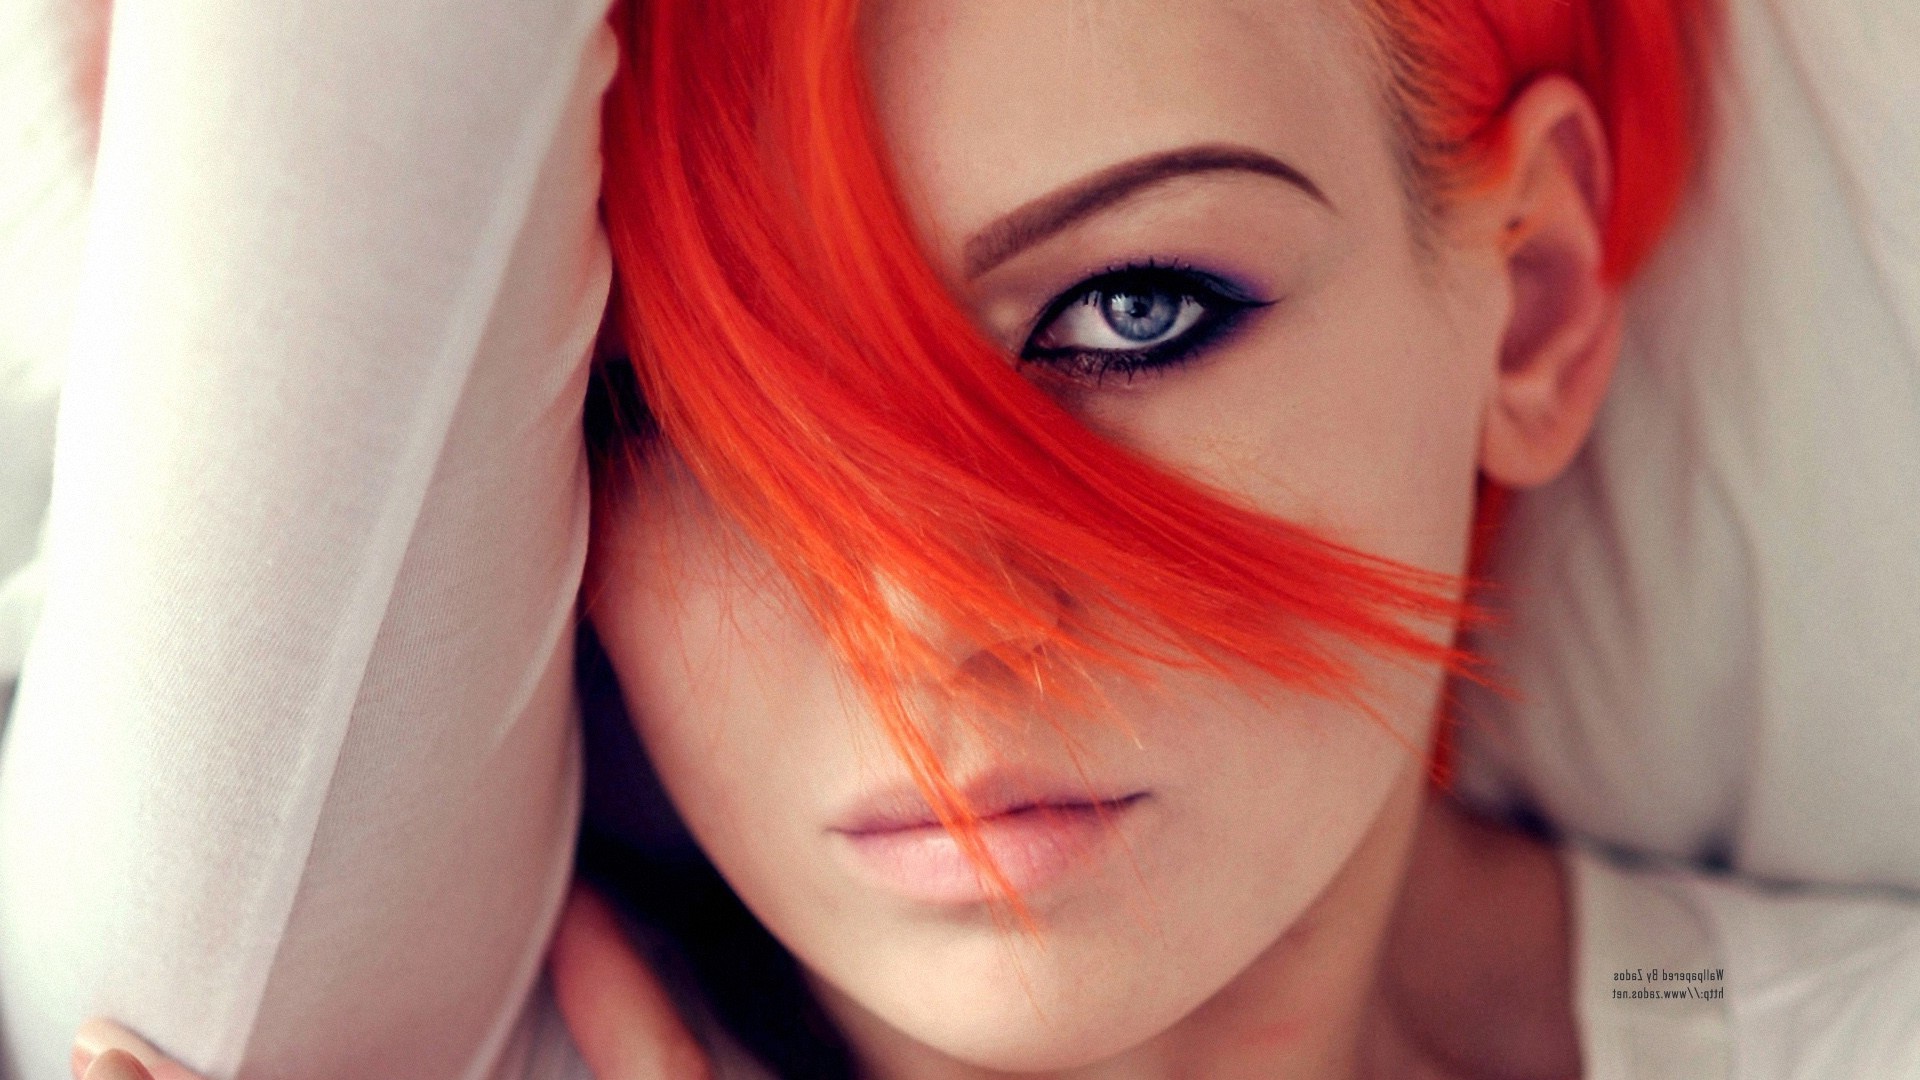 redhead, Blue Eyes, Orange Hair, Closeup, Face, White Tops, Lying Down, Aleksandra Zenibyfajnie Wydrych Wallpaper